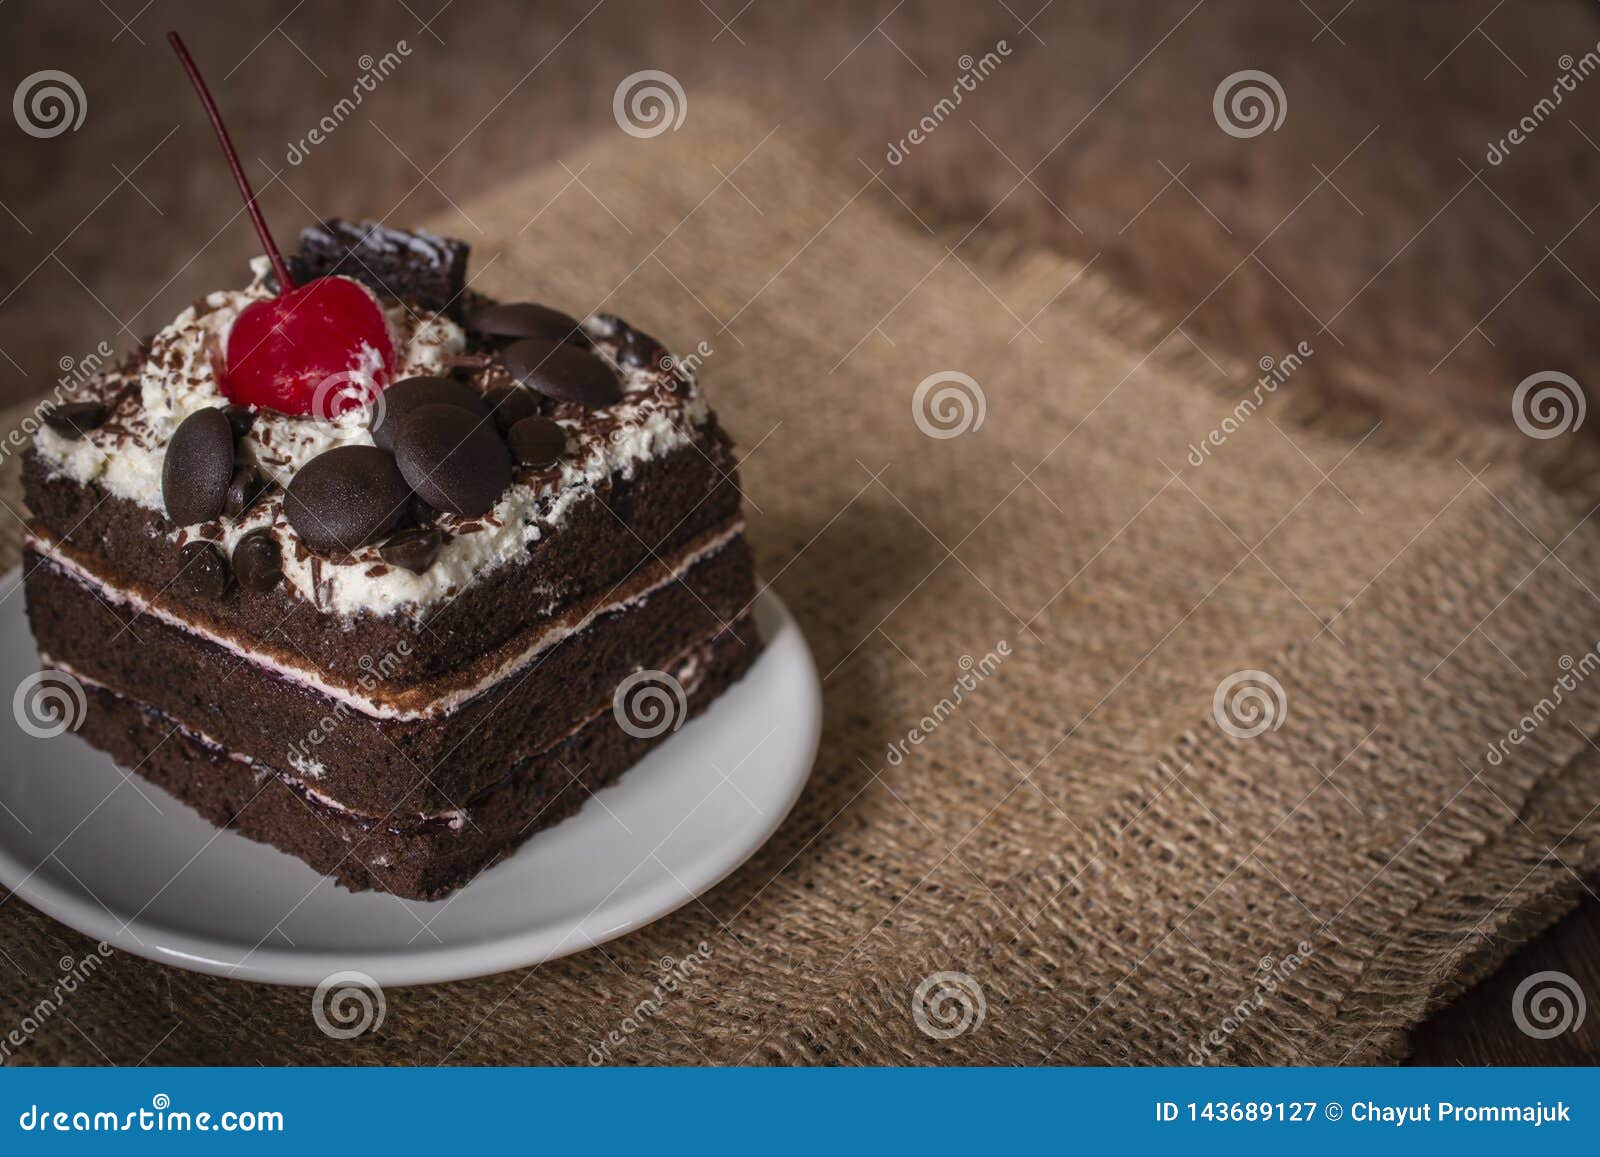 Happy Birthday Black Background Hd Wallpaper | Happy birthday cake  pictures, Birthday cake pictures, Happy birthday cake images